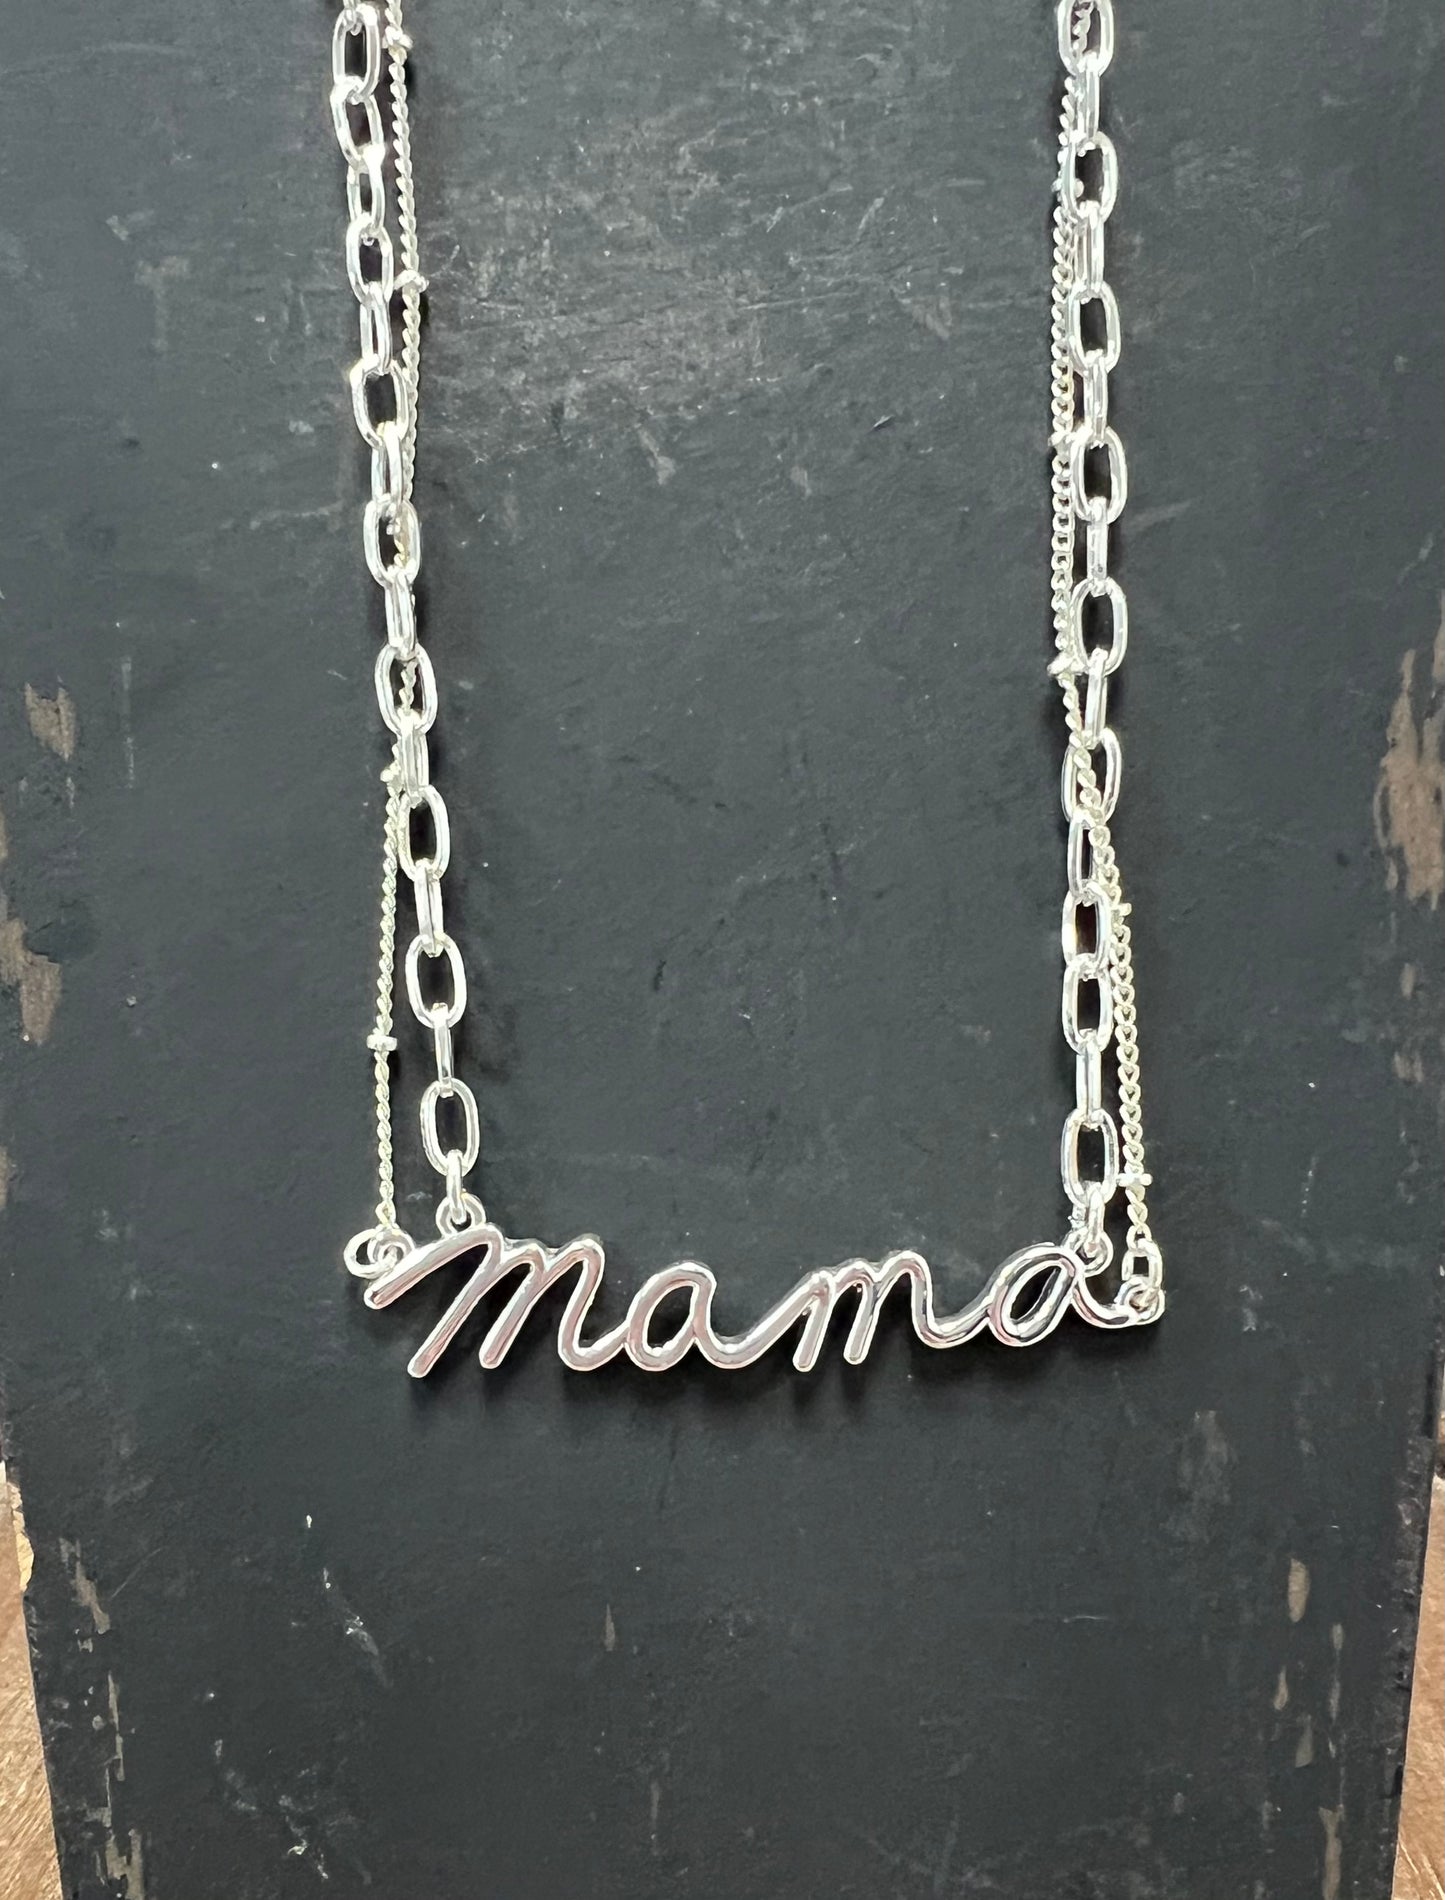 Silver Mama Necklace